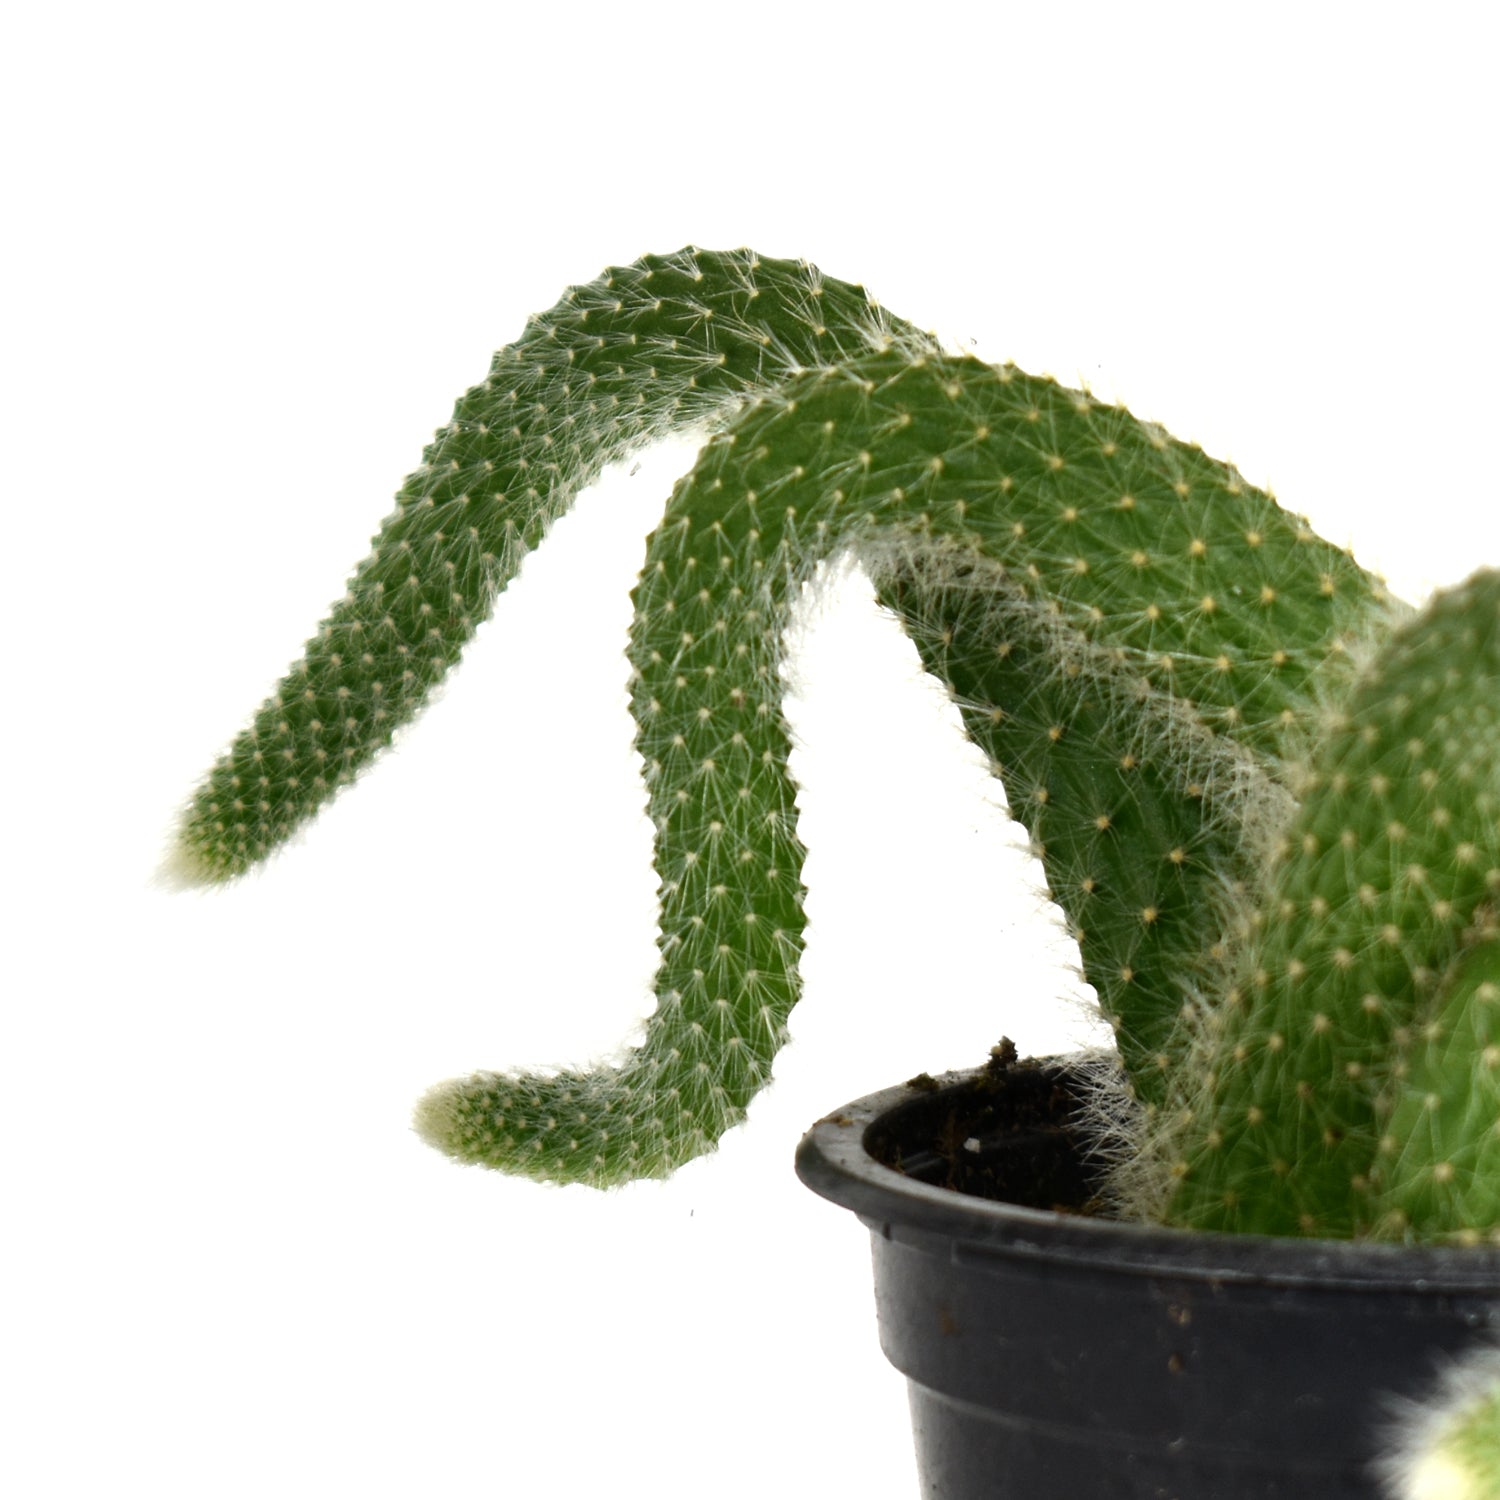 Cleistocactus winteri ssp. colademononis (Monkey Tail Cactus)